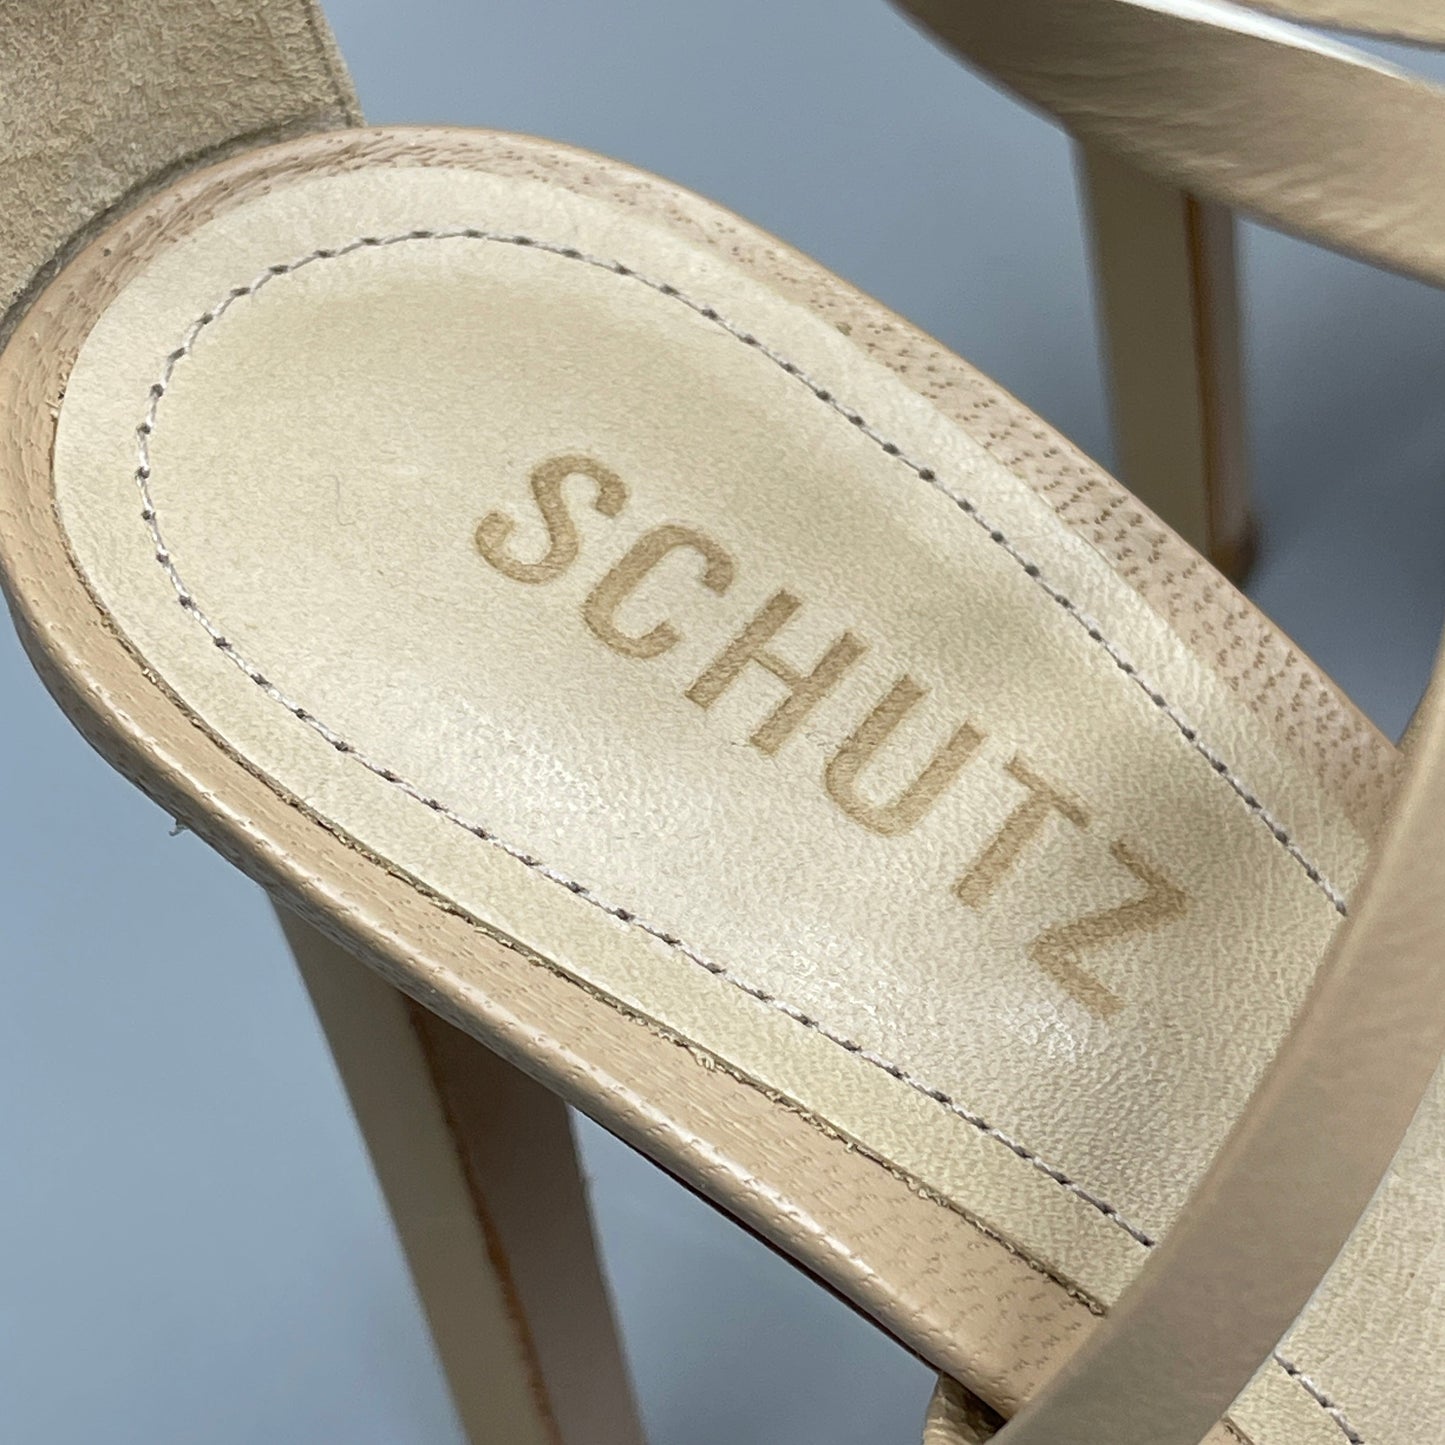 SCHUTZ Bryce Ankle Tie Women's Leather High Heel Sandal Light Nude Sz 7B (New)